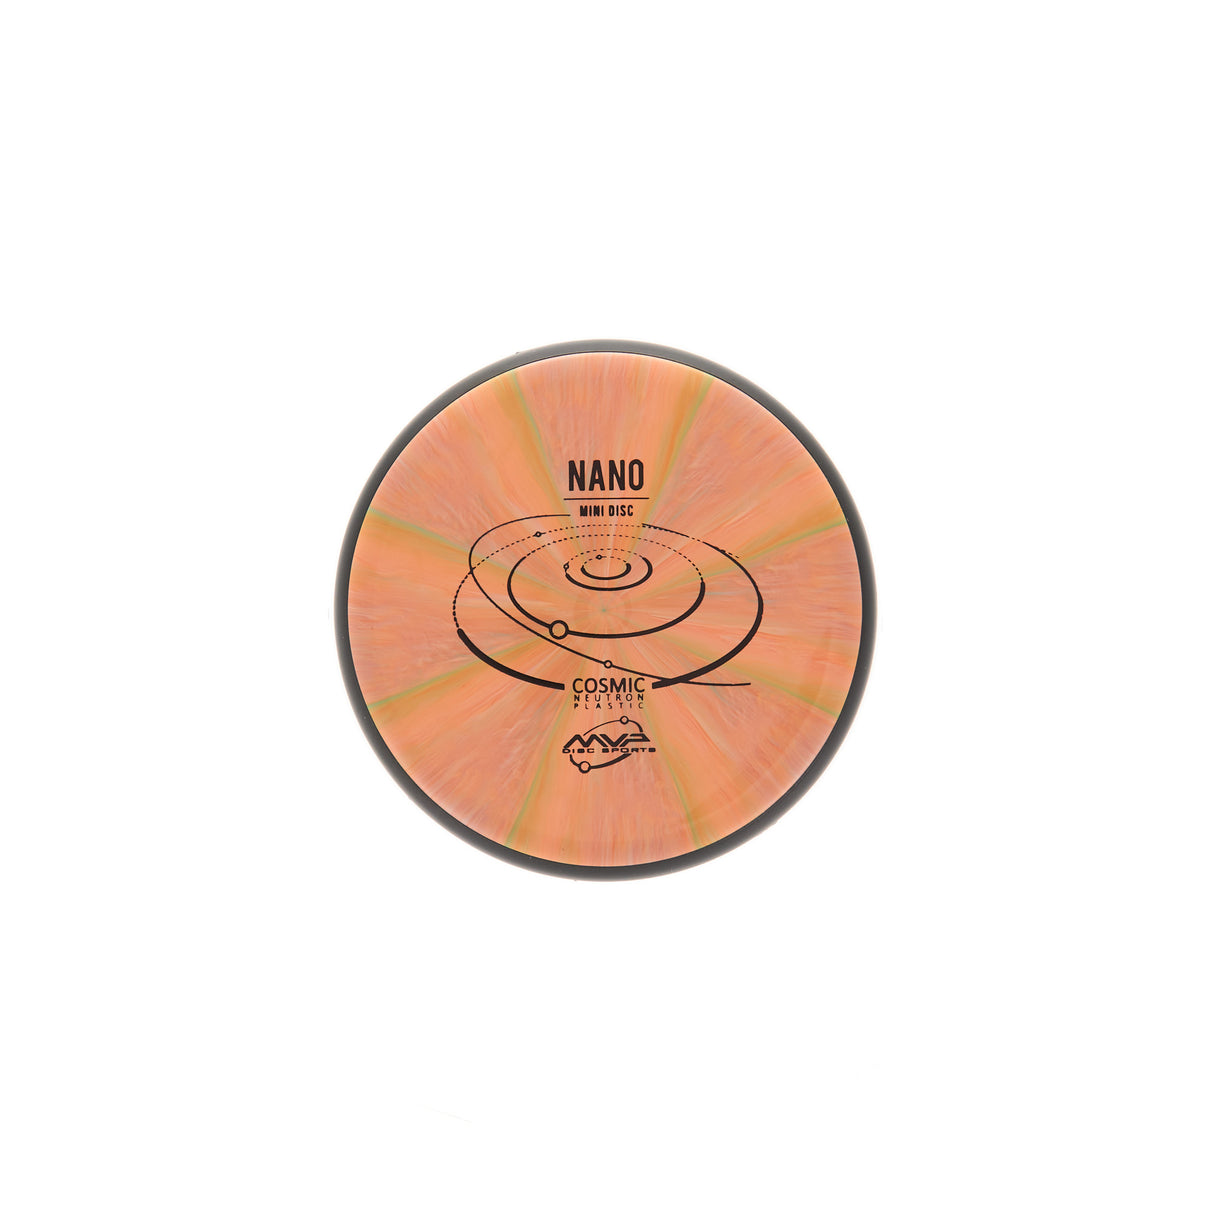 MVP Nano - Cosmic Neutron 29g | Style 0008